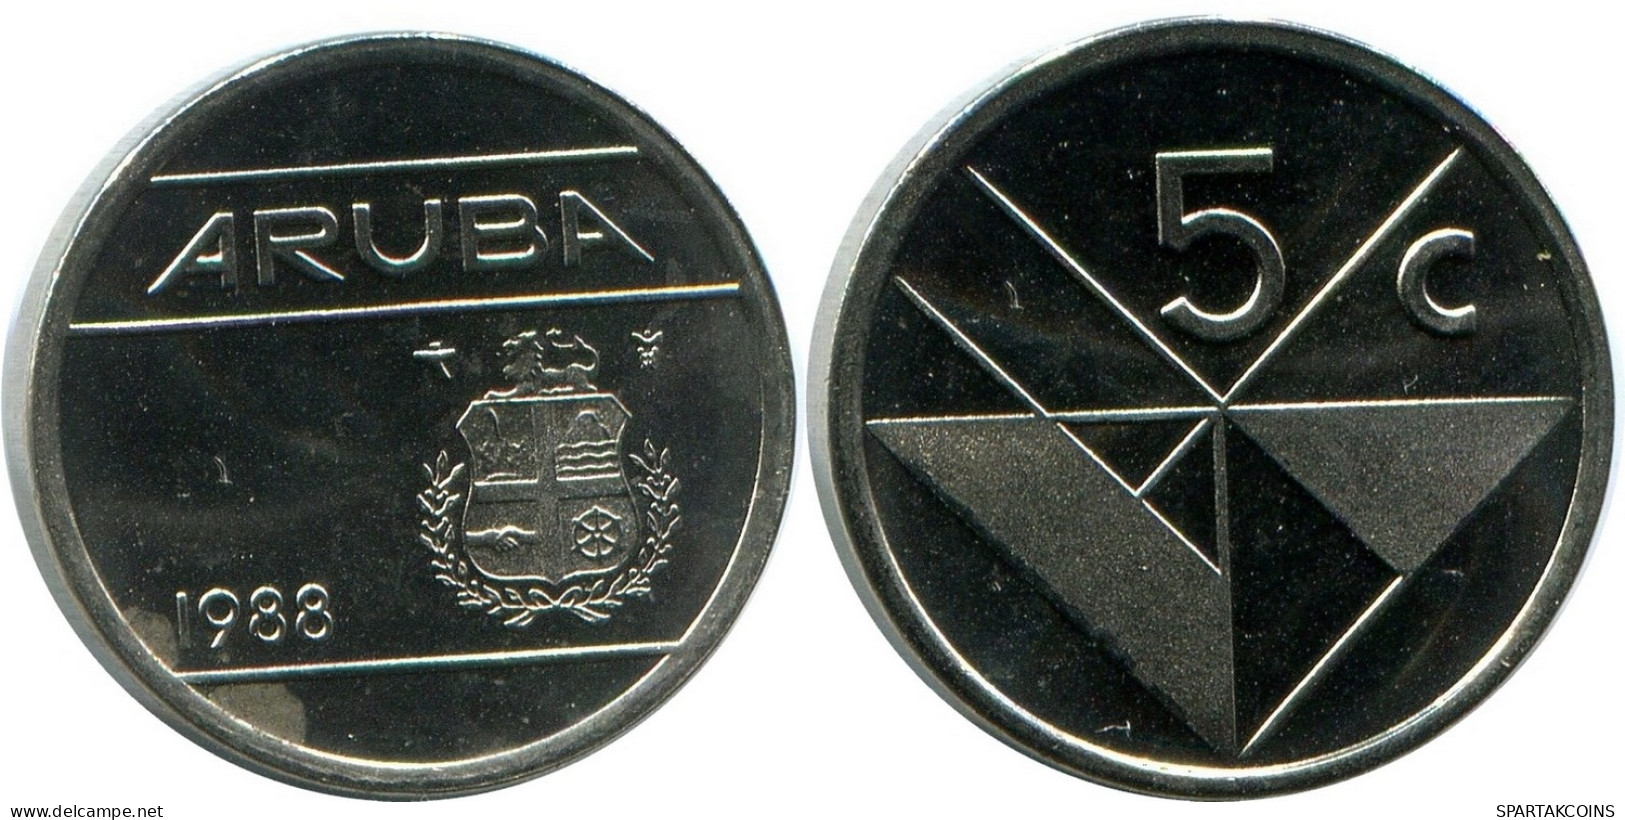 5 CENTS 1988 ARUBA Coin (From BU Mint Set) #AH109.U - Aruba